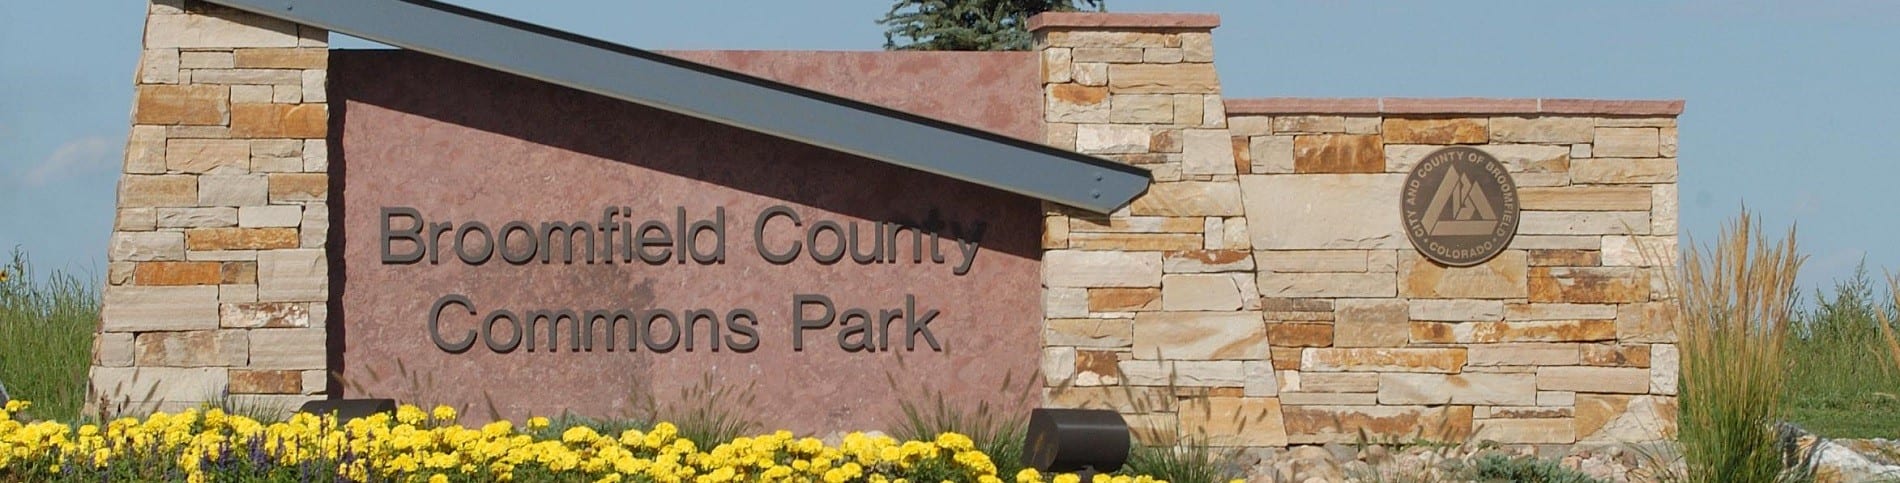 7 Best Parks in Broomfield, Colorado